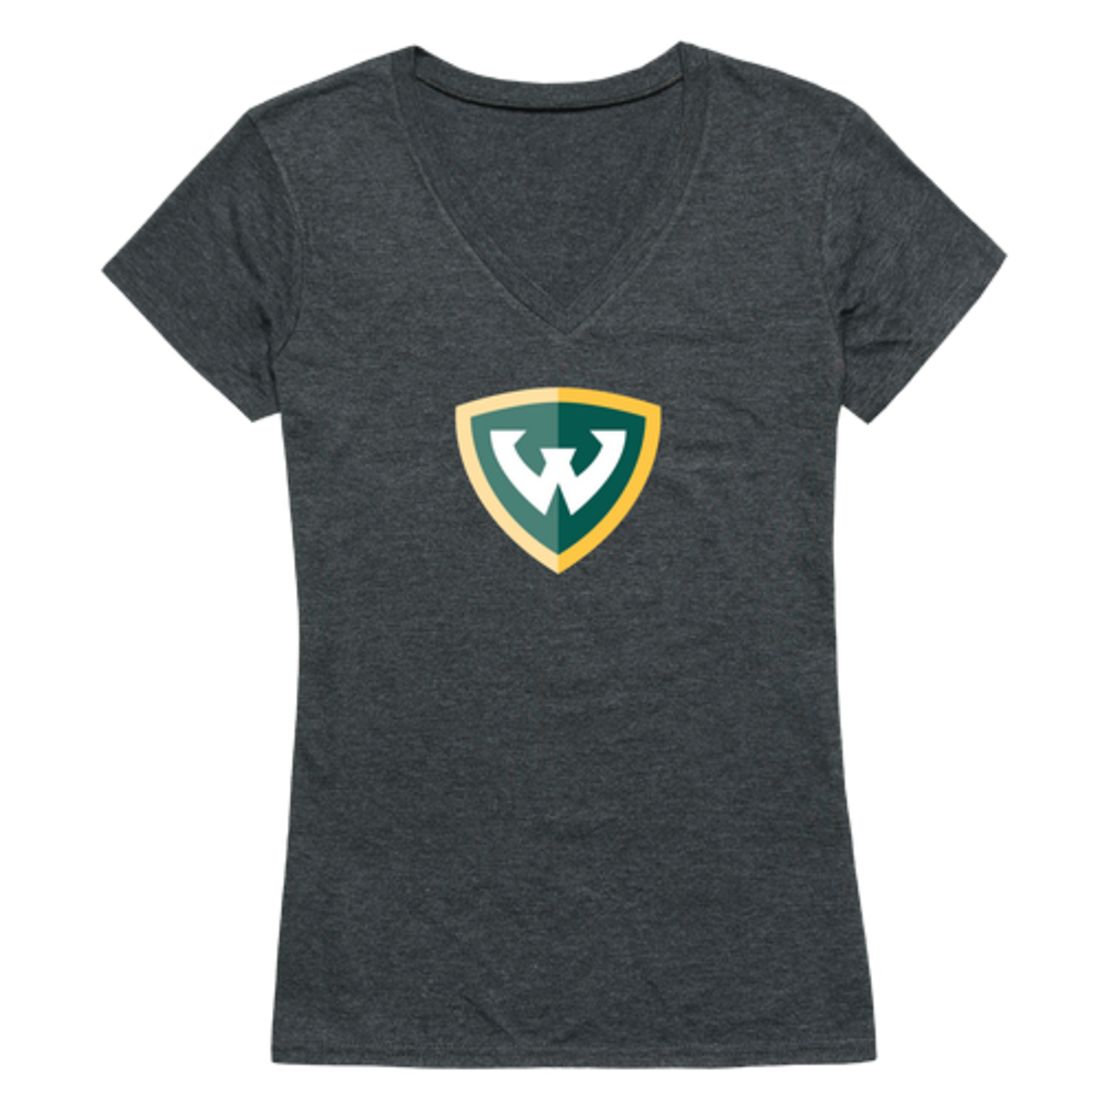 Wayne State University Warriors Womens Cinder T-Shirt